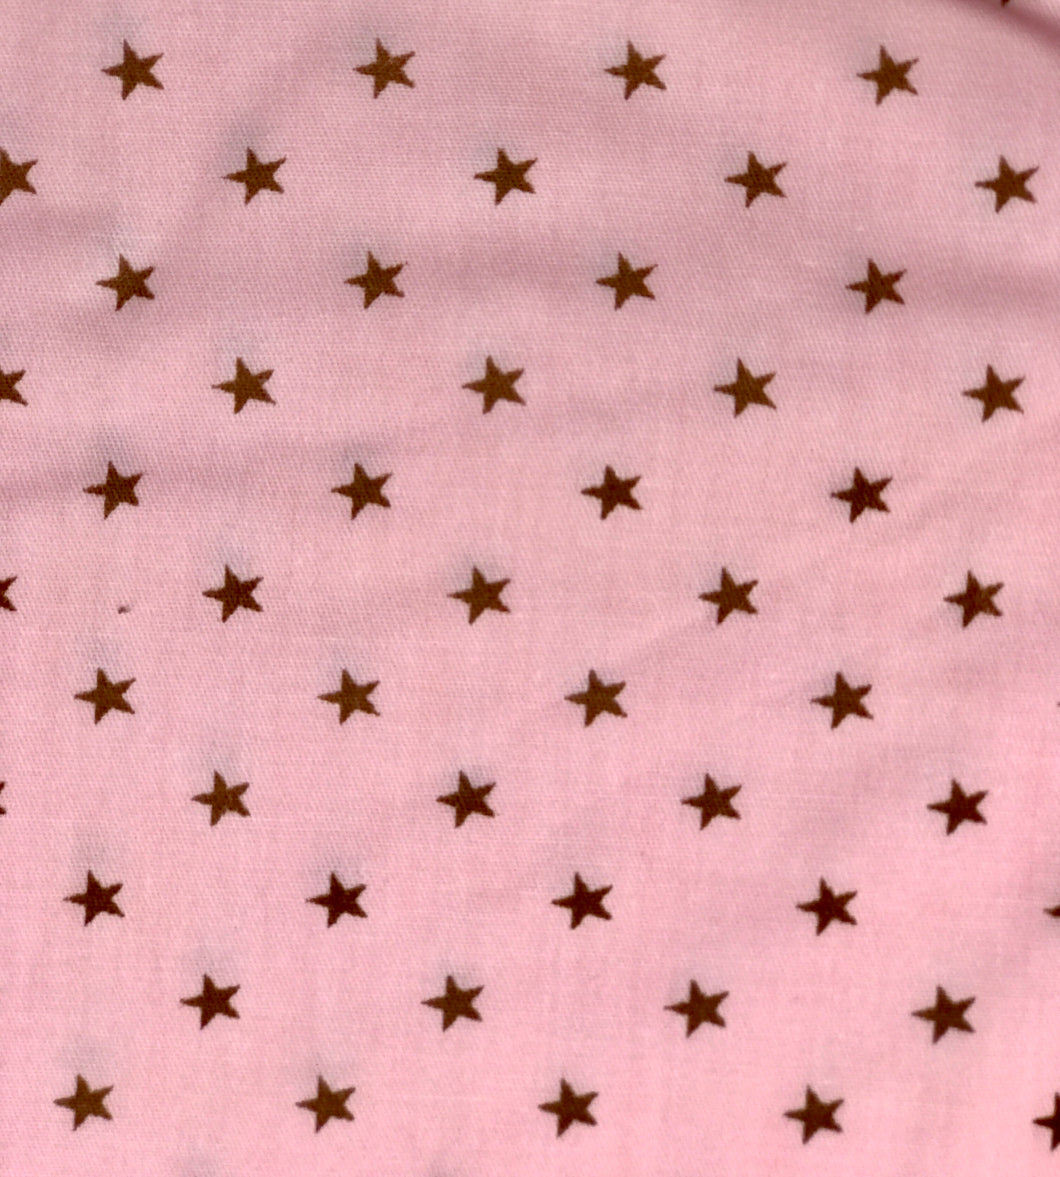 Stars on Pink Printed Cotton Fabric